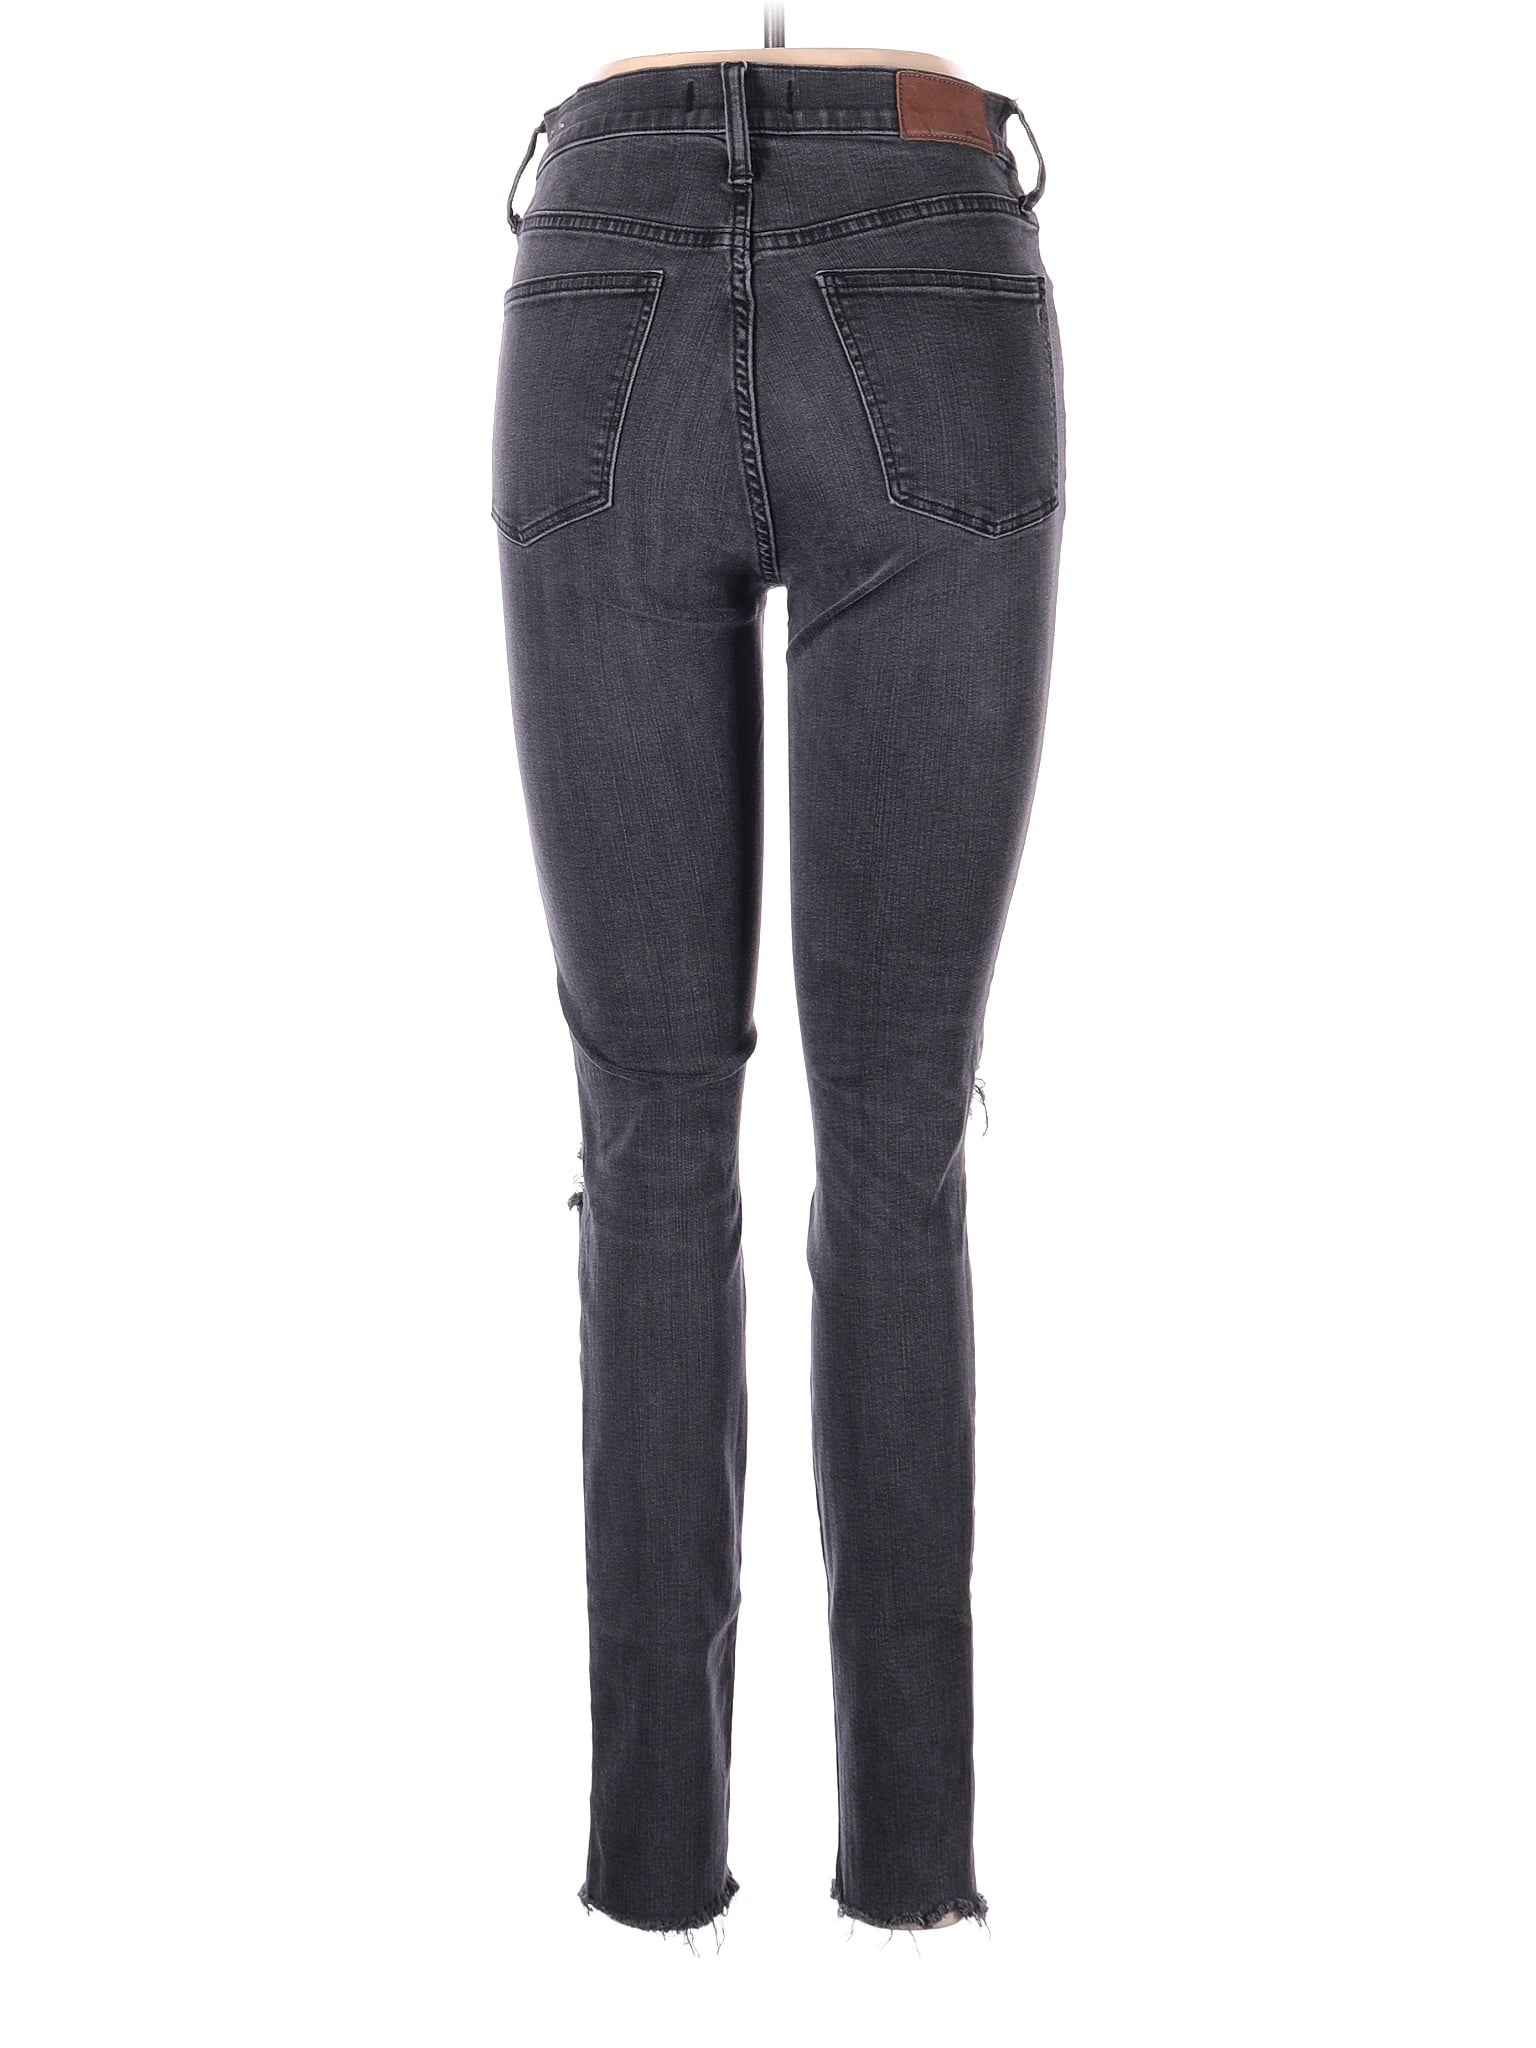 High-Rise Skinny Tall 9" Mid-Rise Skinny Jeans In Black Sea in Dark Wash waist size - 29